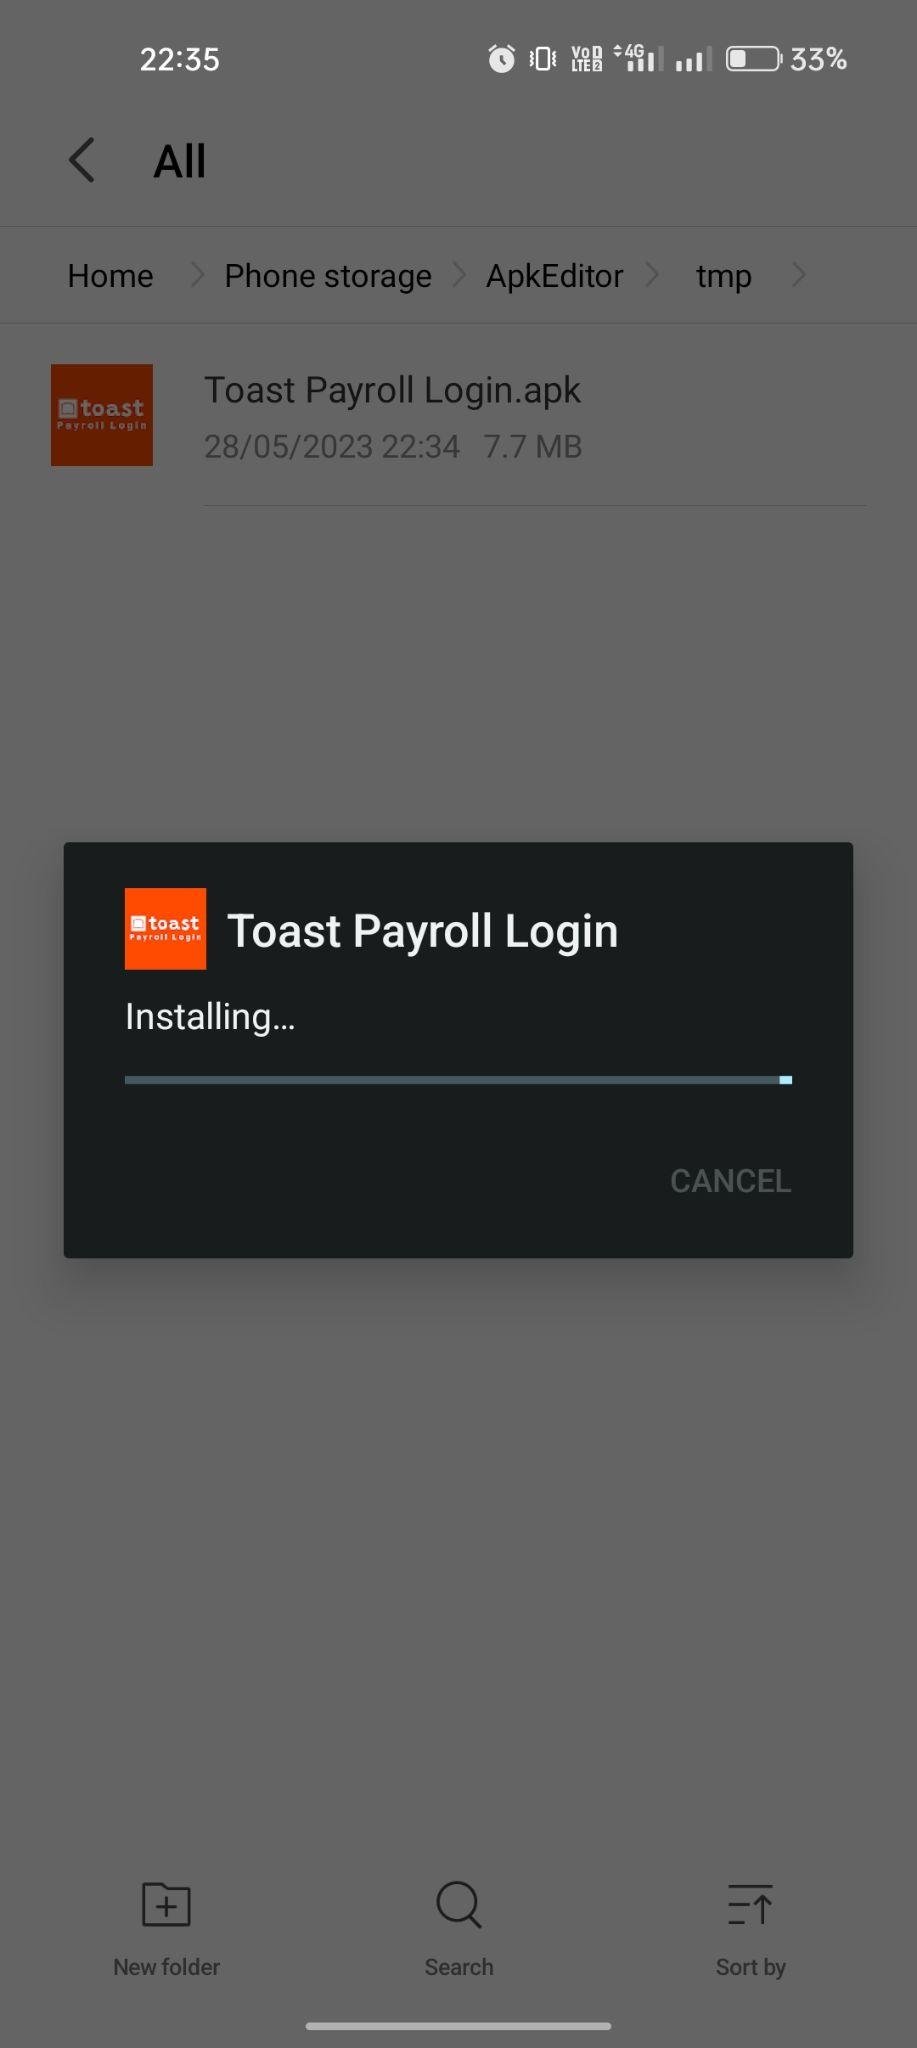 Toast Payroll Login apk installing